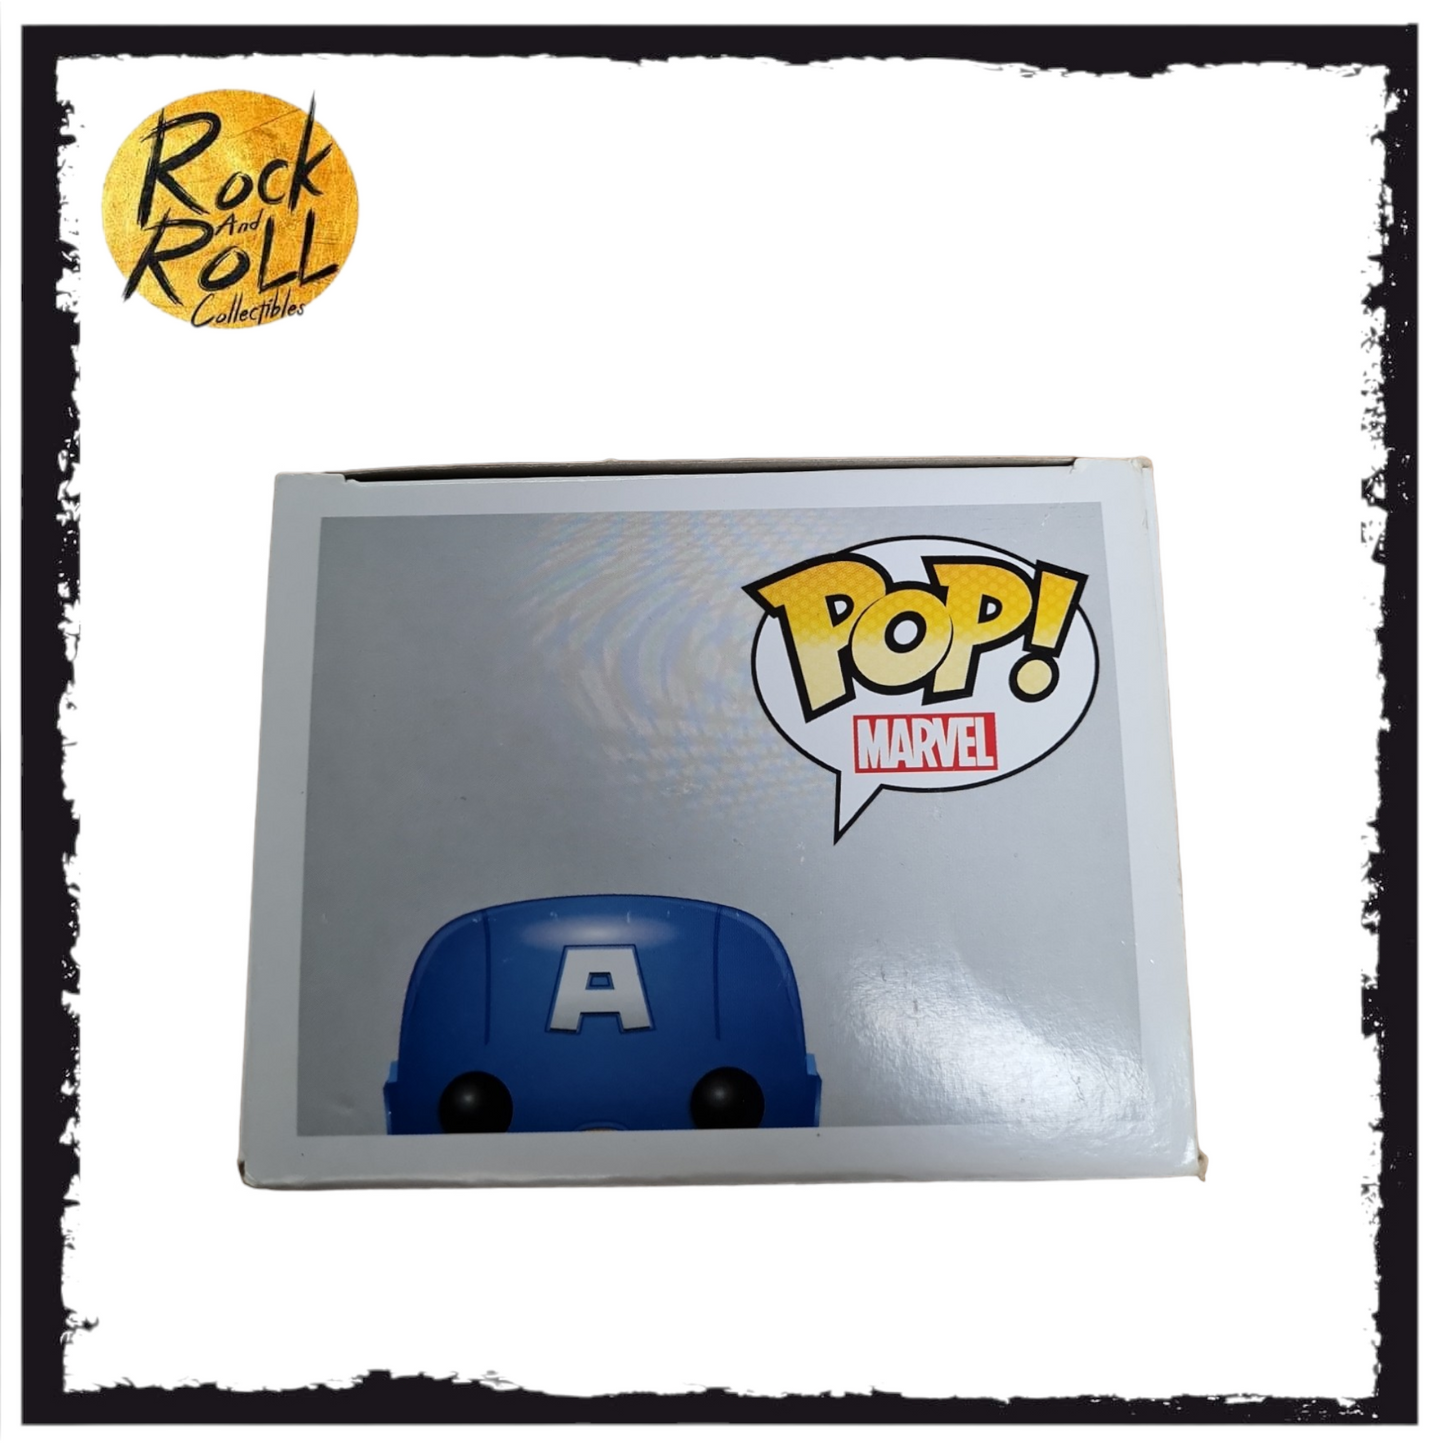 Marvel Avengers - Captain America Funko Pop! #10 Condition 7/10